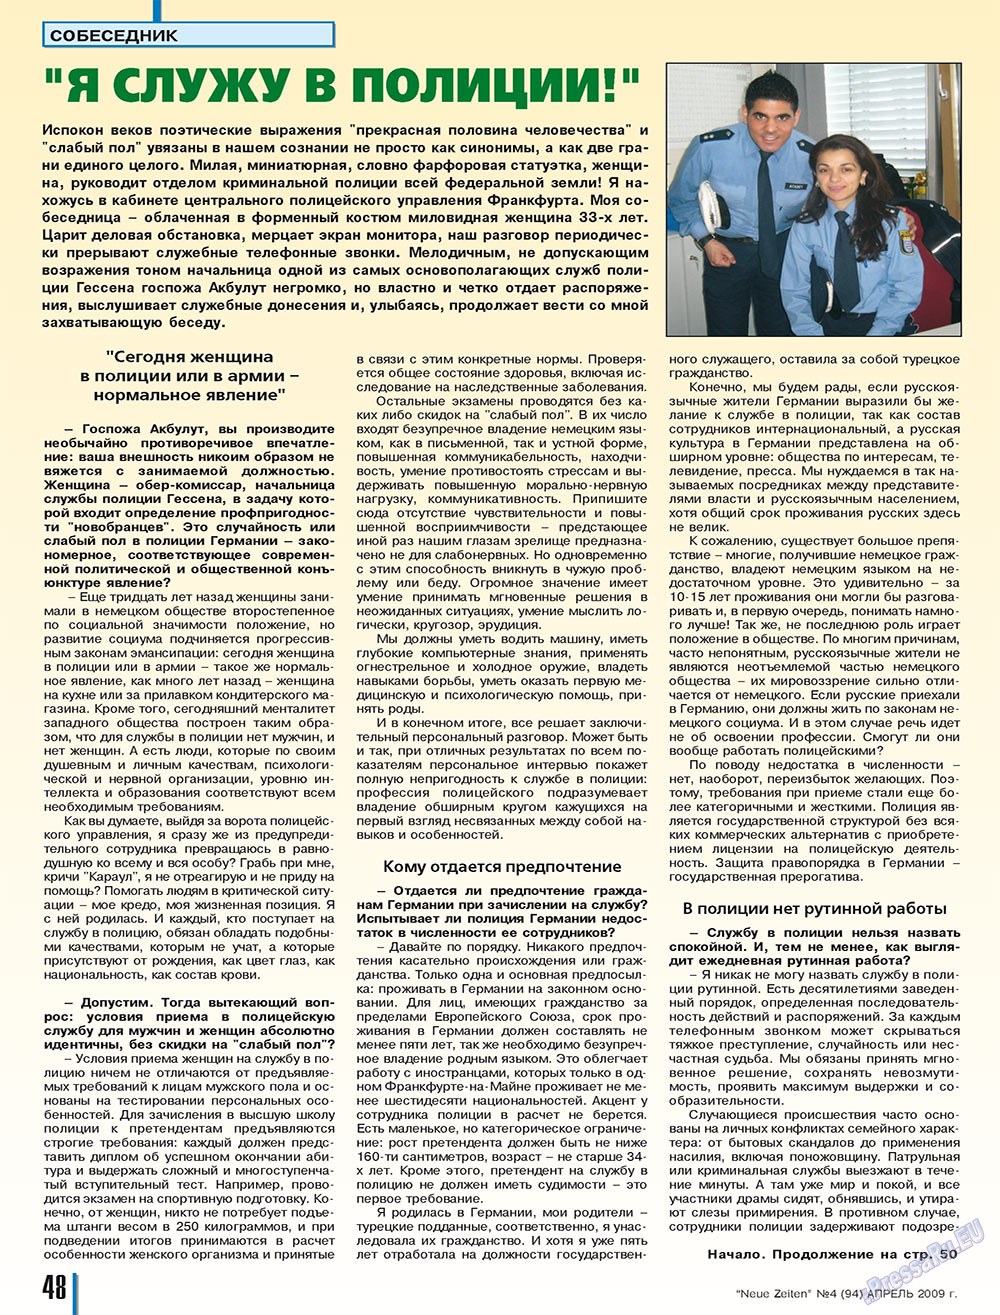 Neue Zeiten (журнал). 2009 год, номер 4, стр. 48